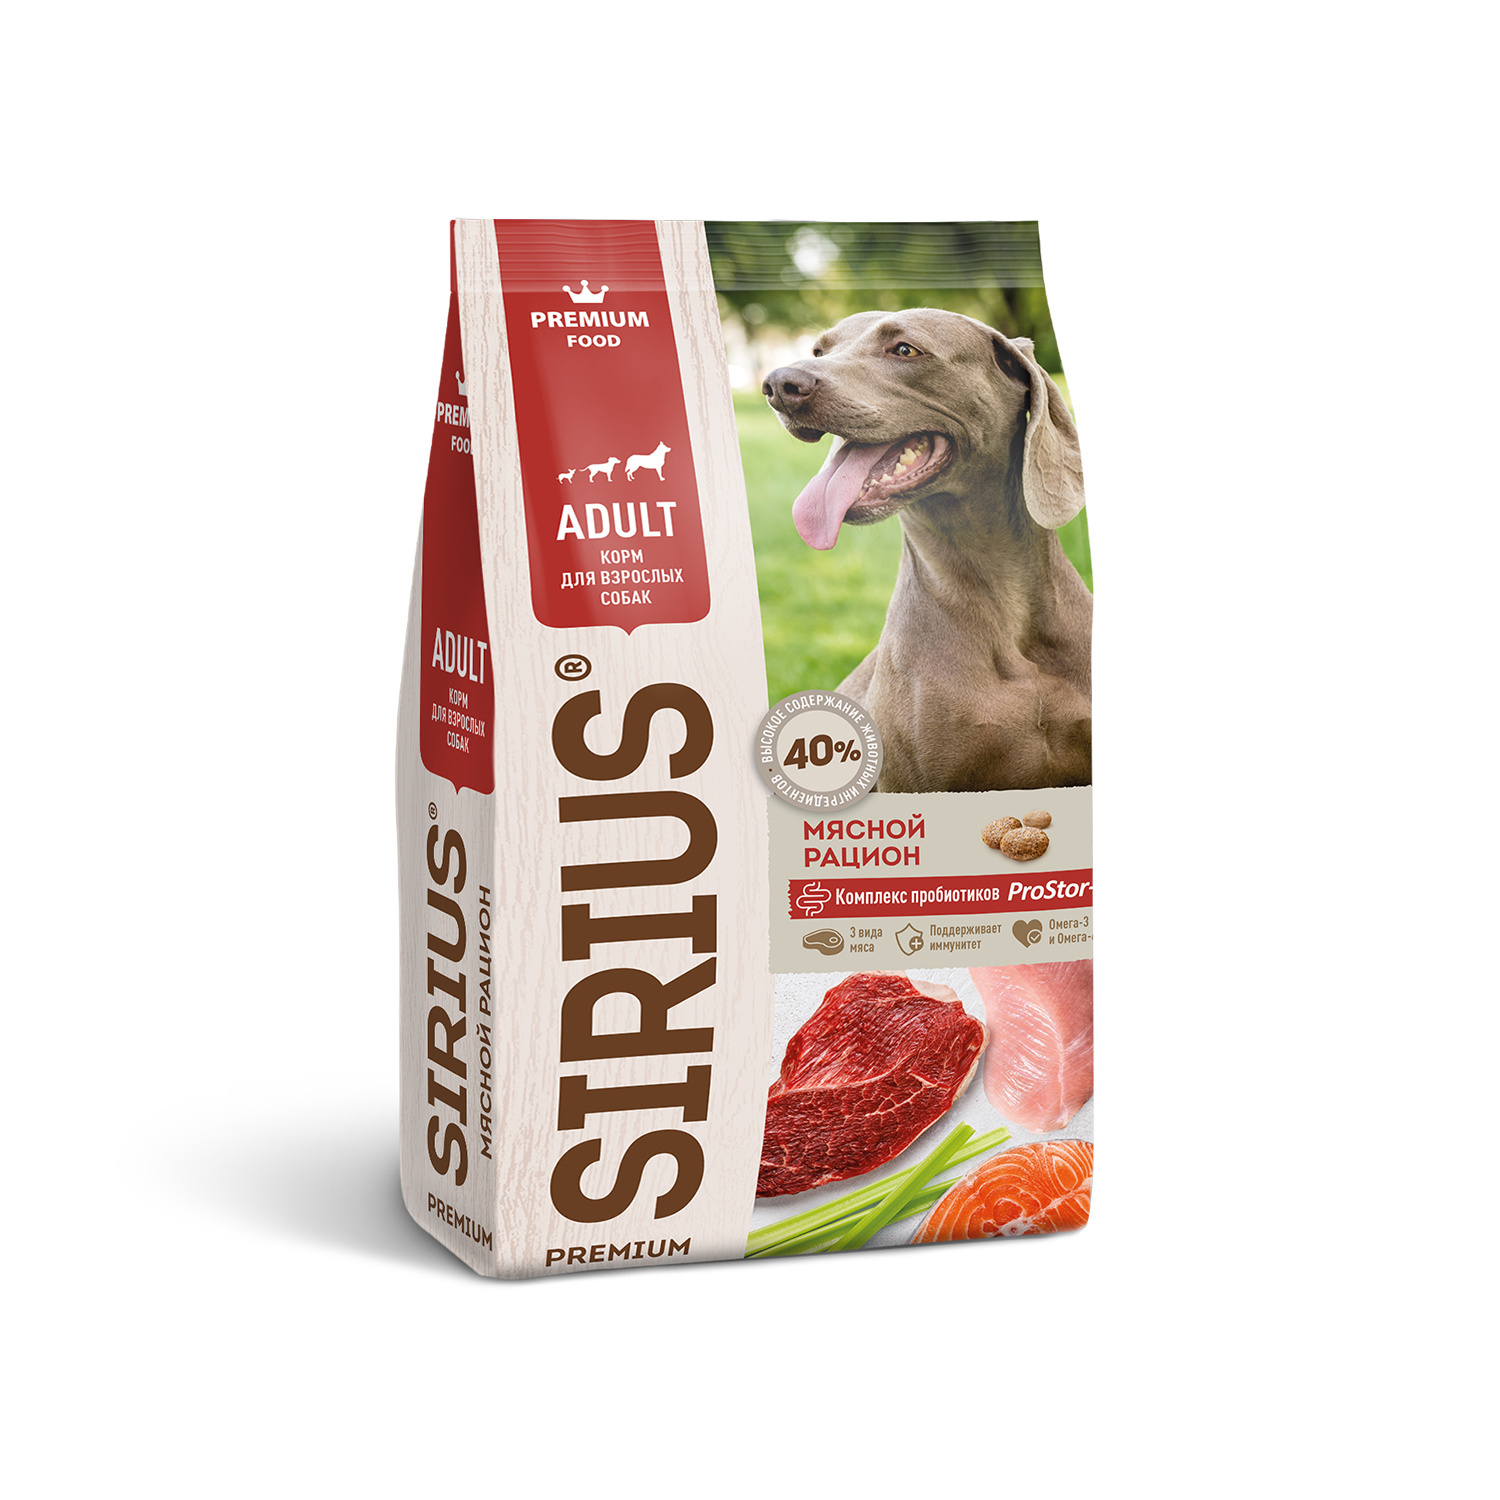 Sirius Sirius сухой корм для собак, мясной рацион (15 кг) sirius sirius сухой корм для щенков и молодых собак ягненок с рисом 15 кг